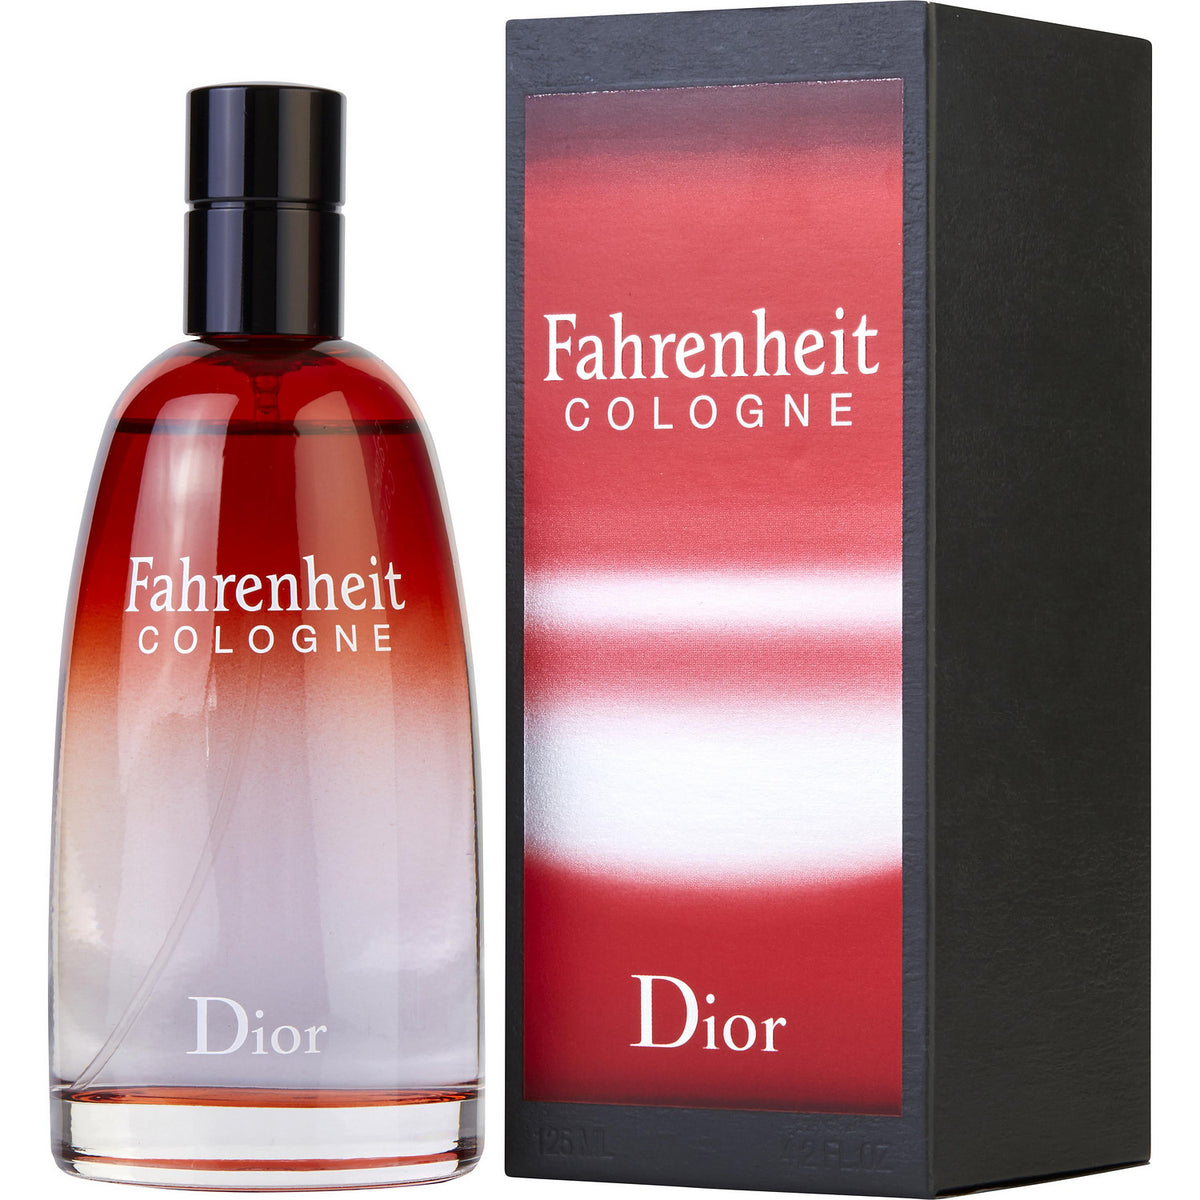 Fahrenheit Parfum - Men's Fragrance - Fragrance